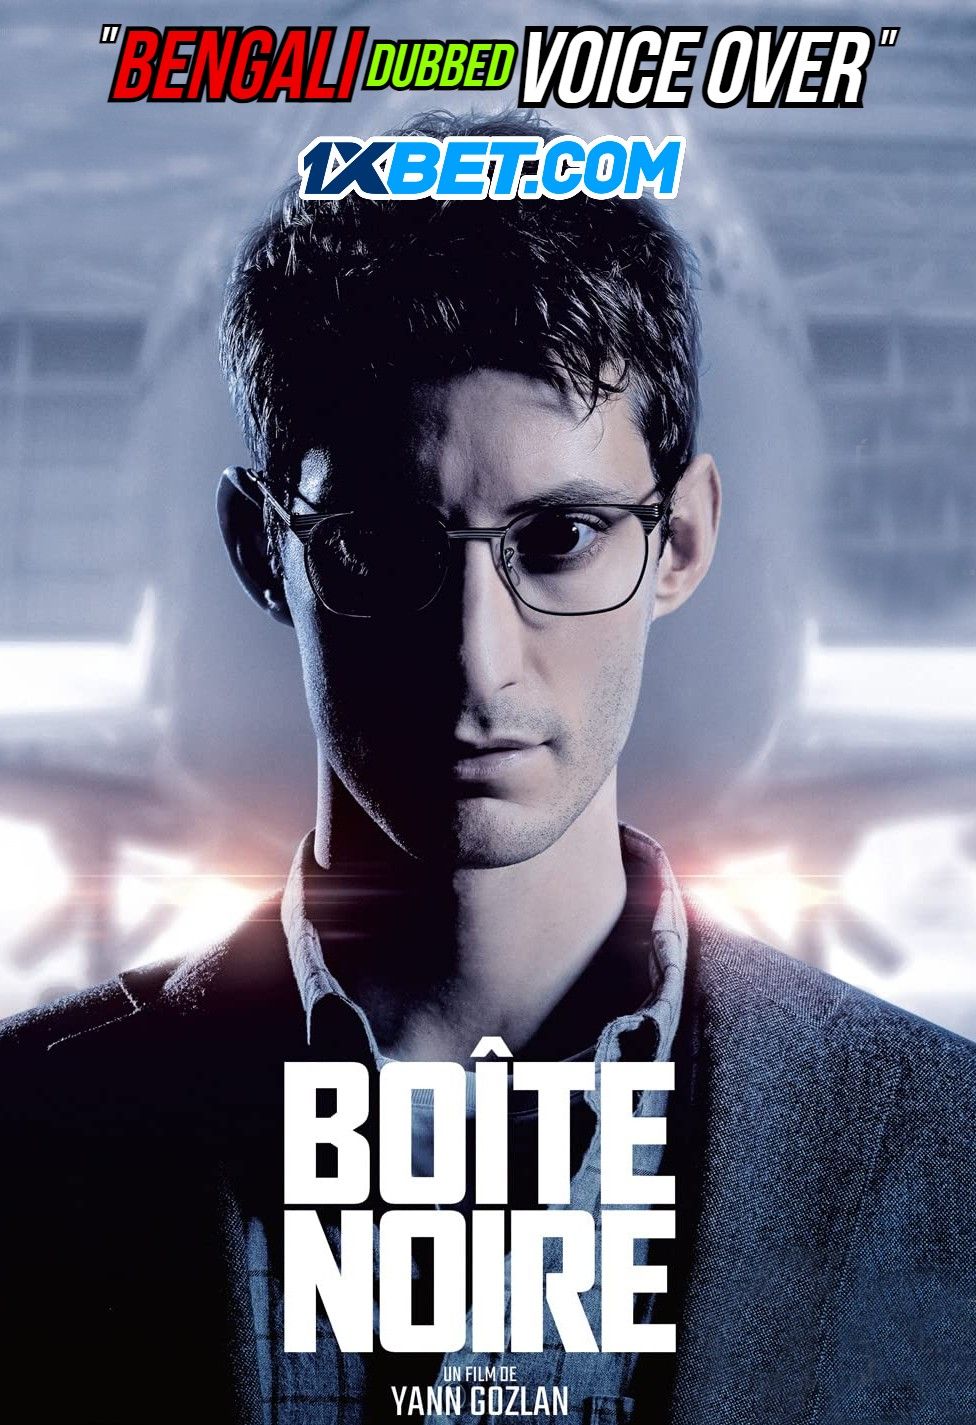 Boite noire (2021) Bengali (Voice Over) Dubbed WEBRip download full movie